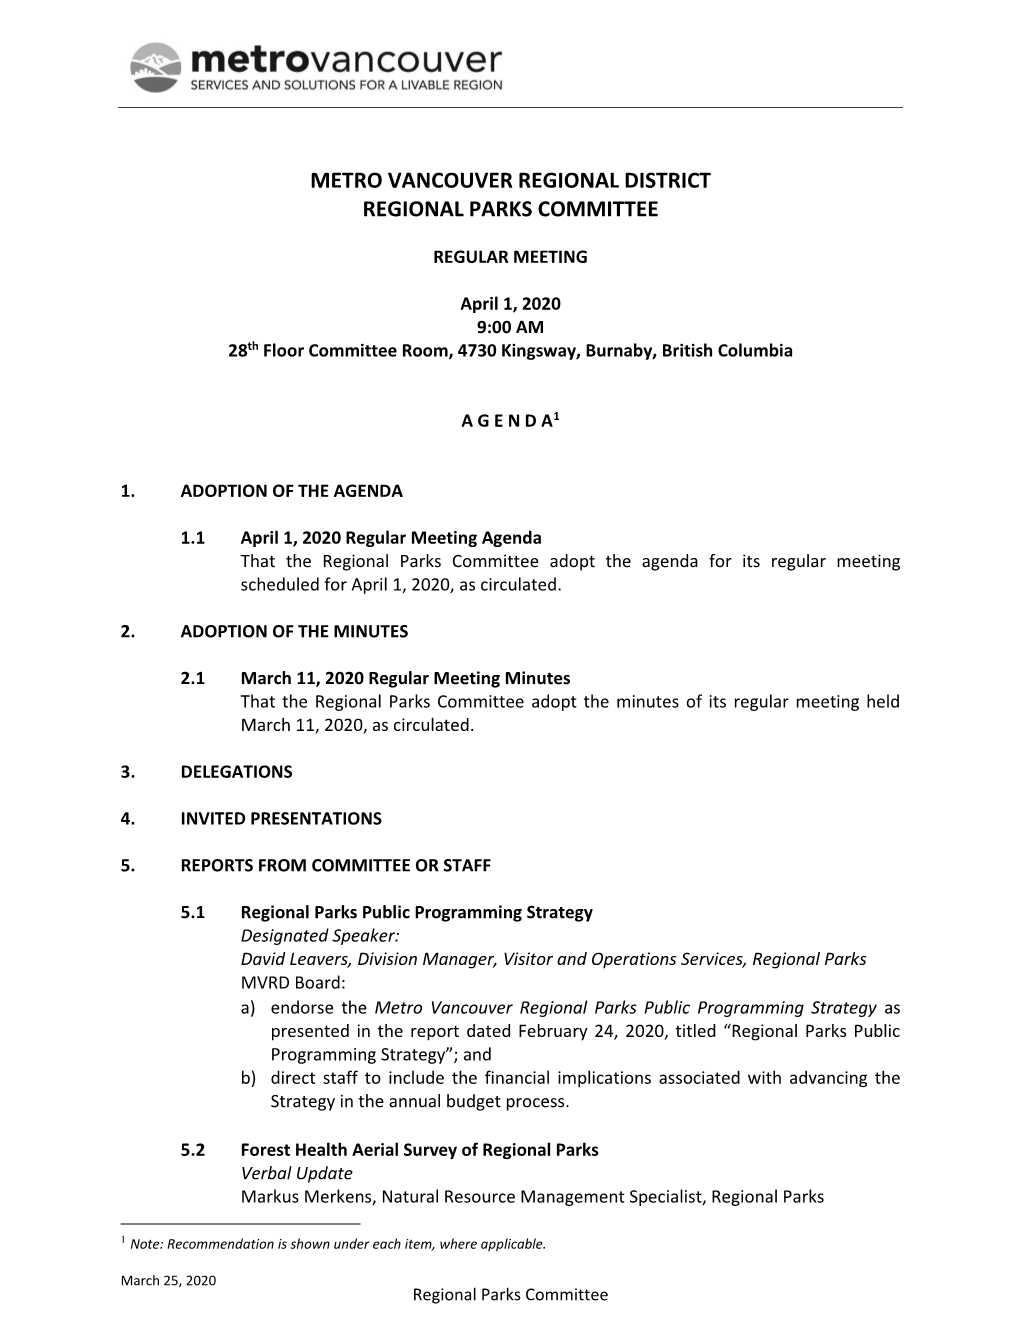 Regional Parks Committee Agenda April 1, 2020